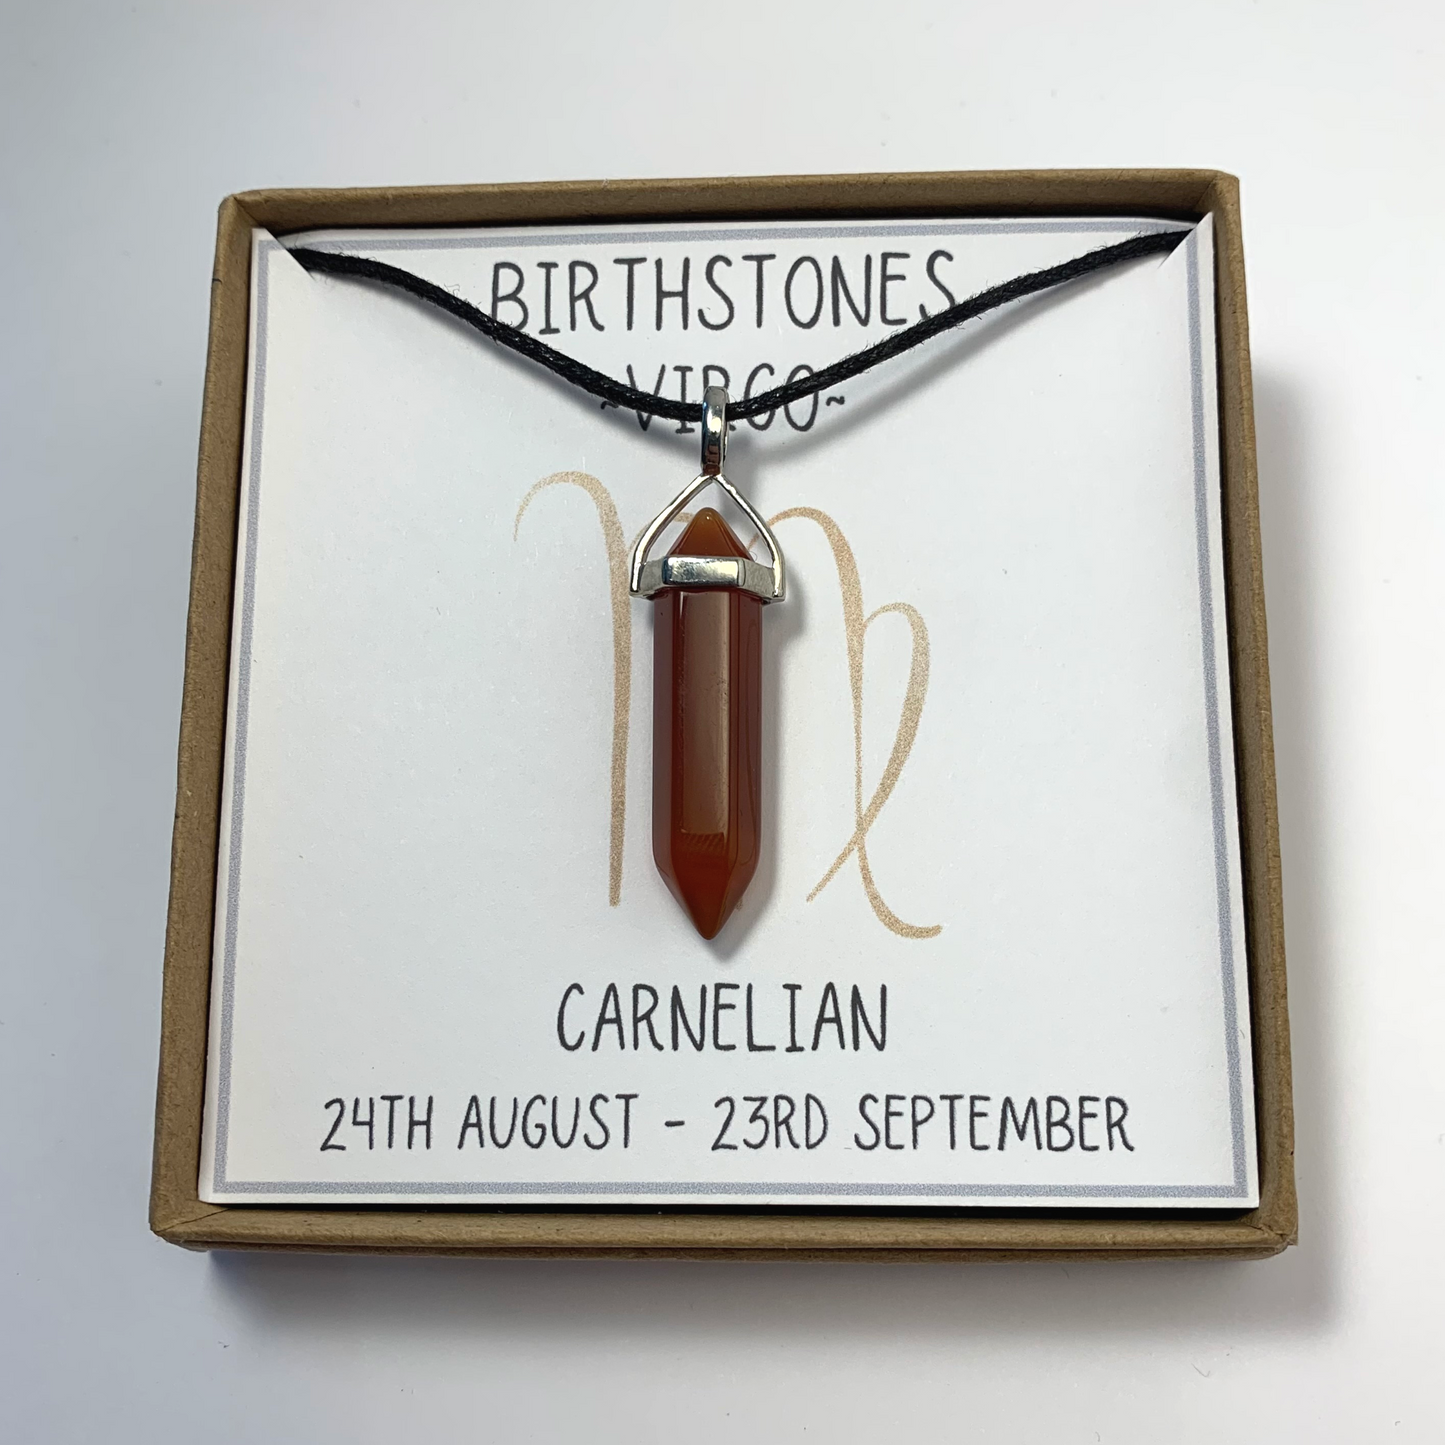 Virgo - Carnelian Birthstone Pendant (24th August - 23rd September)